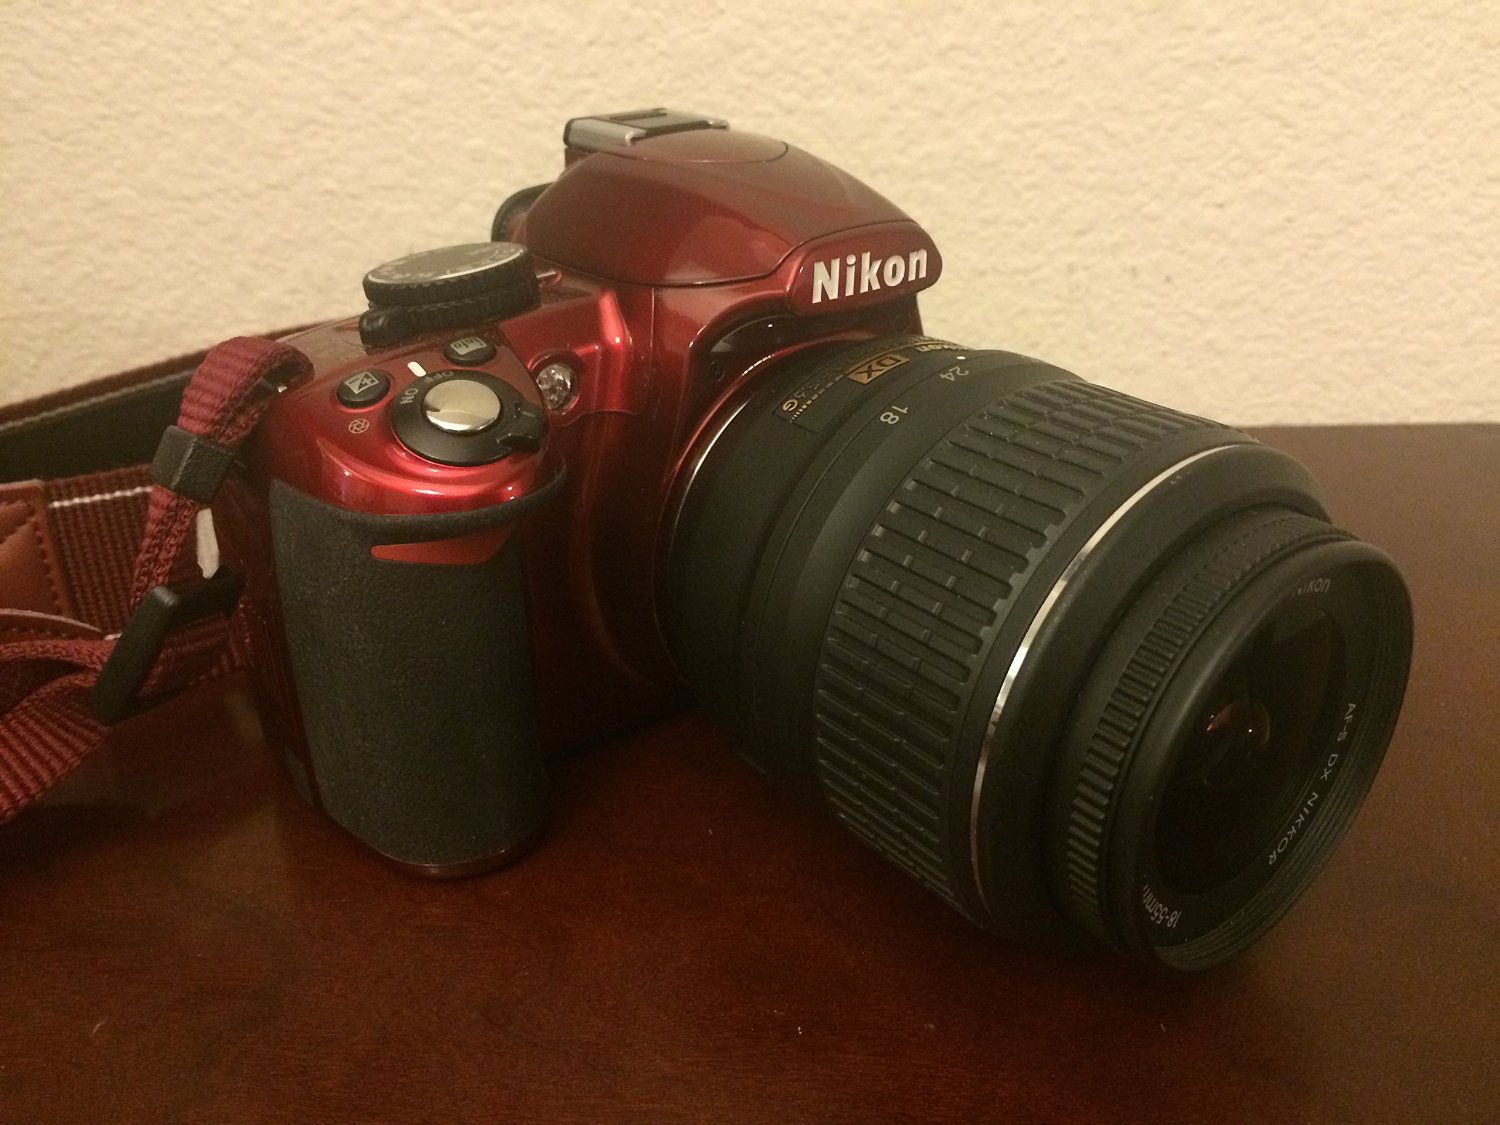 Nikon D3100 Digital SLR Camera